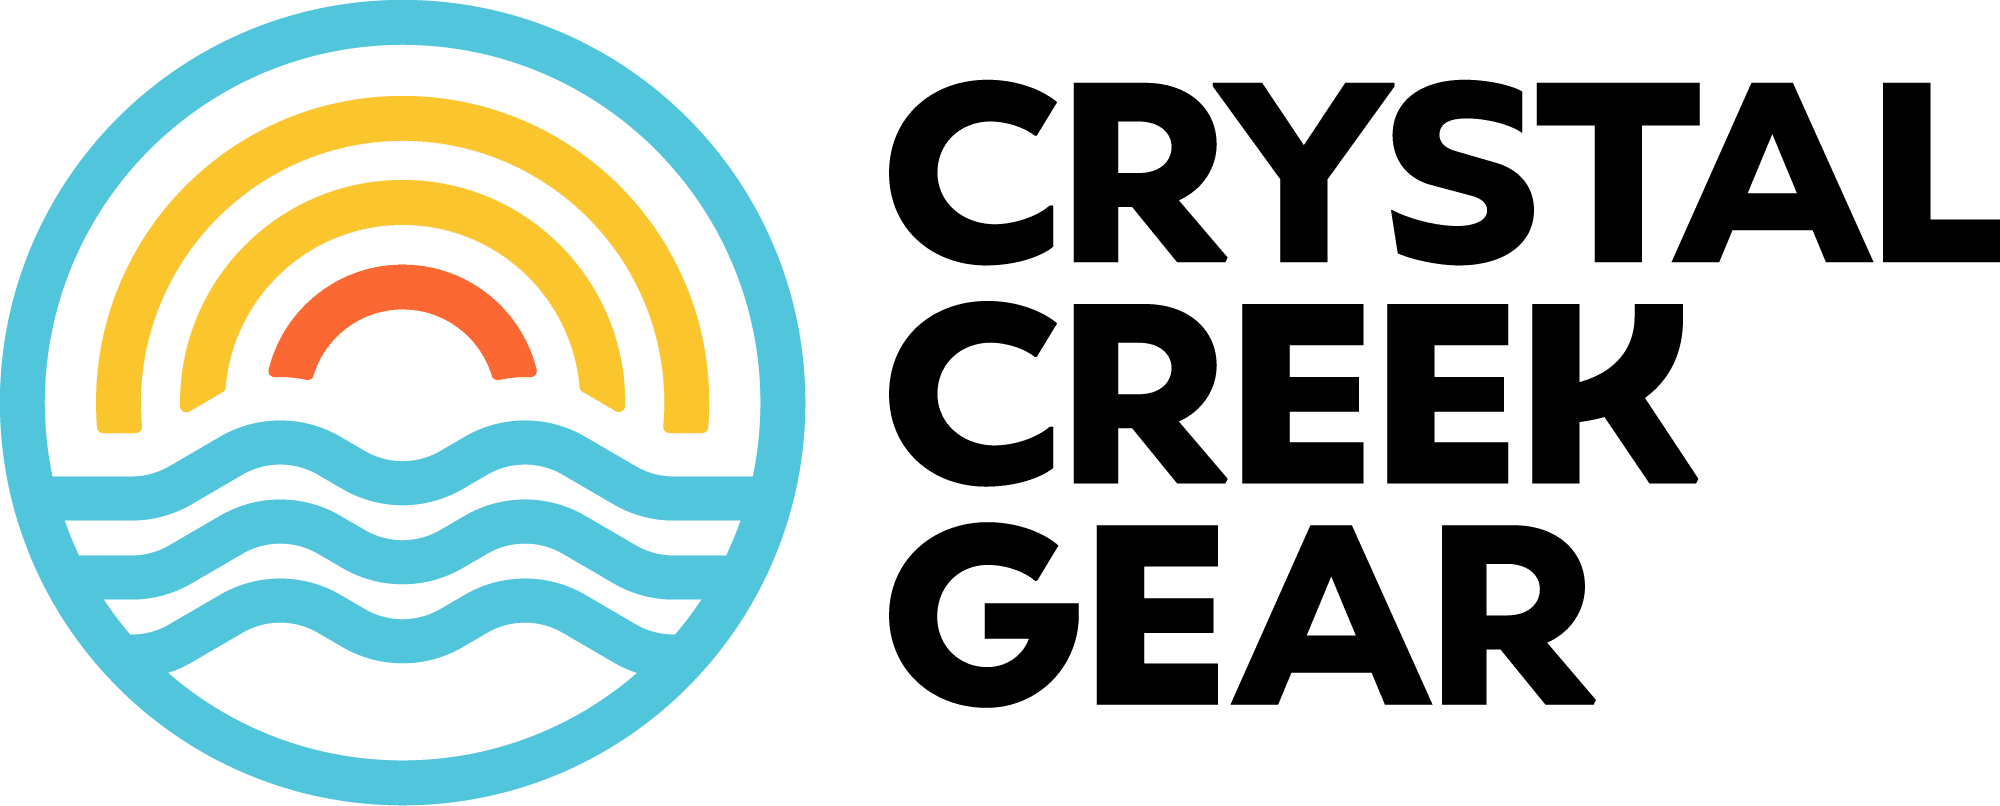 Crystal Creek Gear